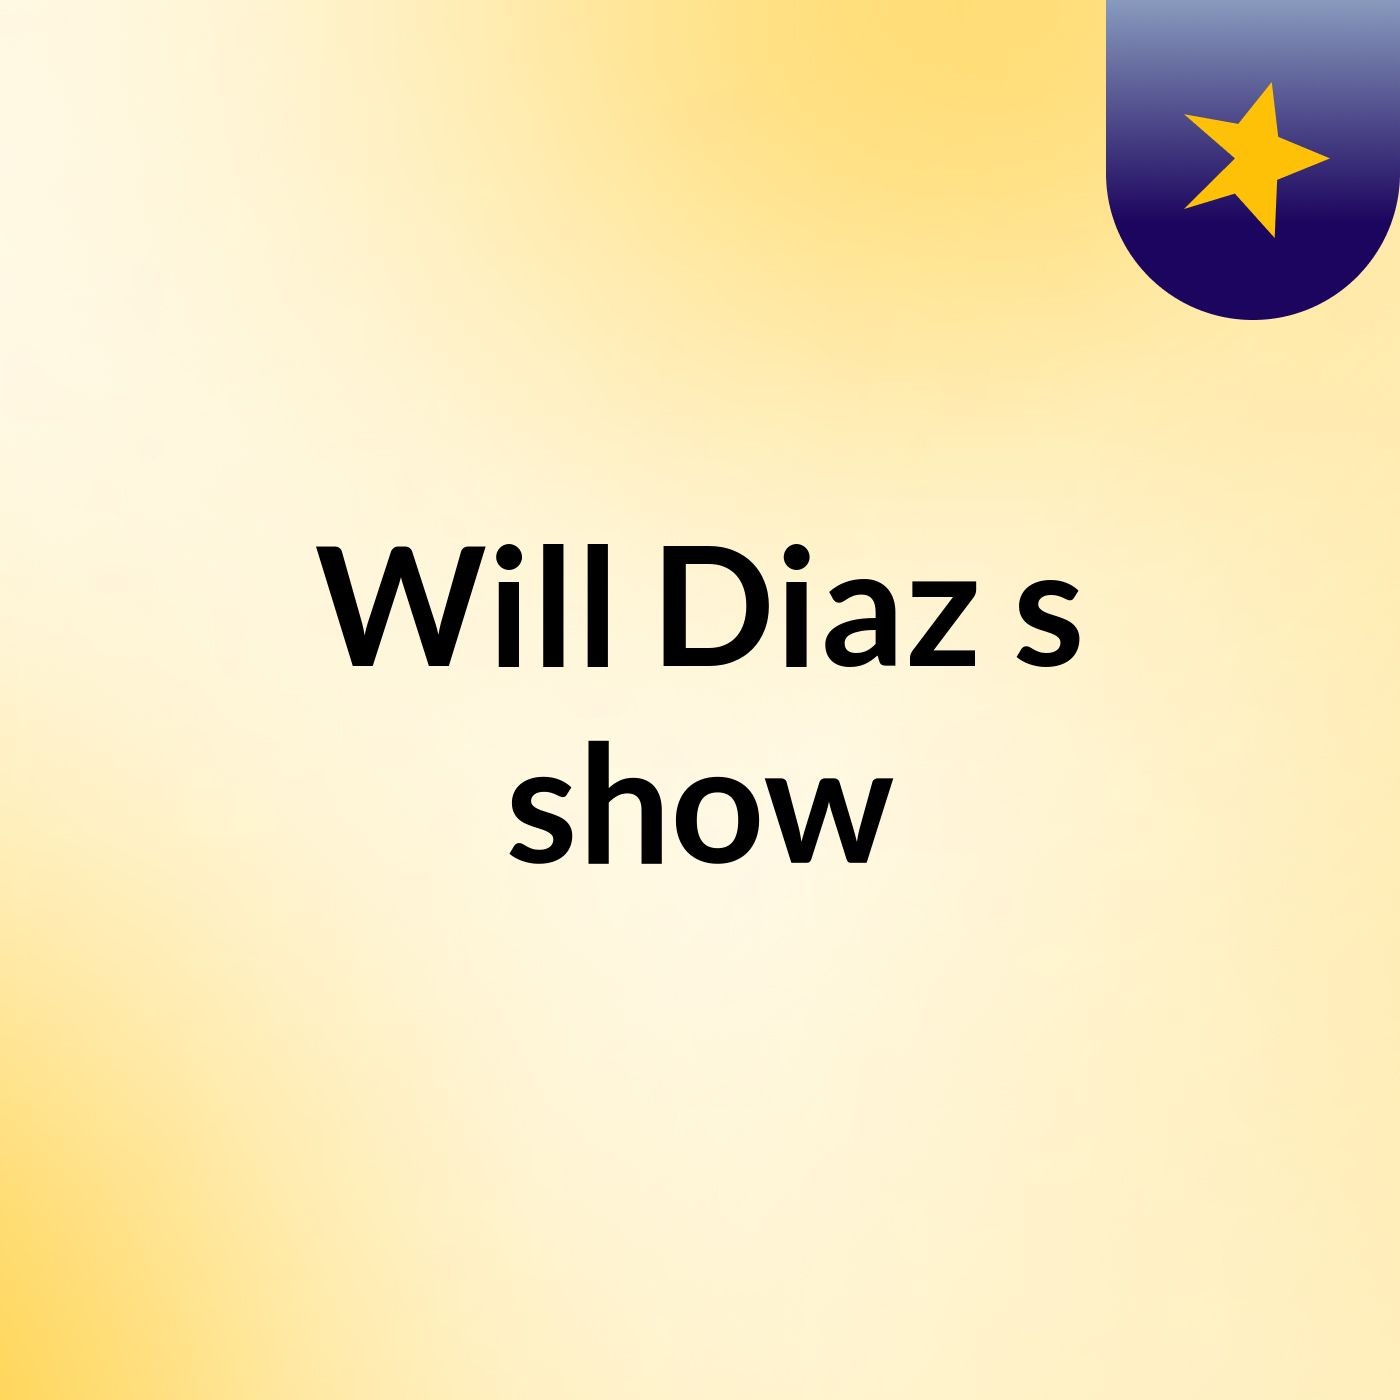 Will Diaz's show